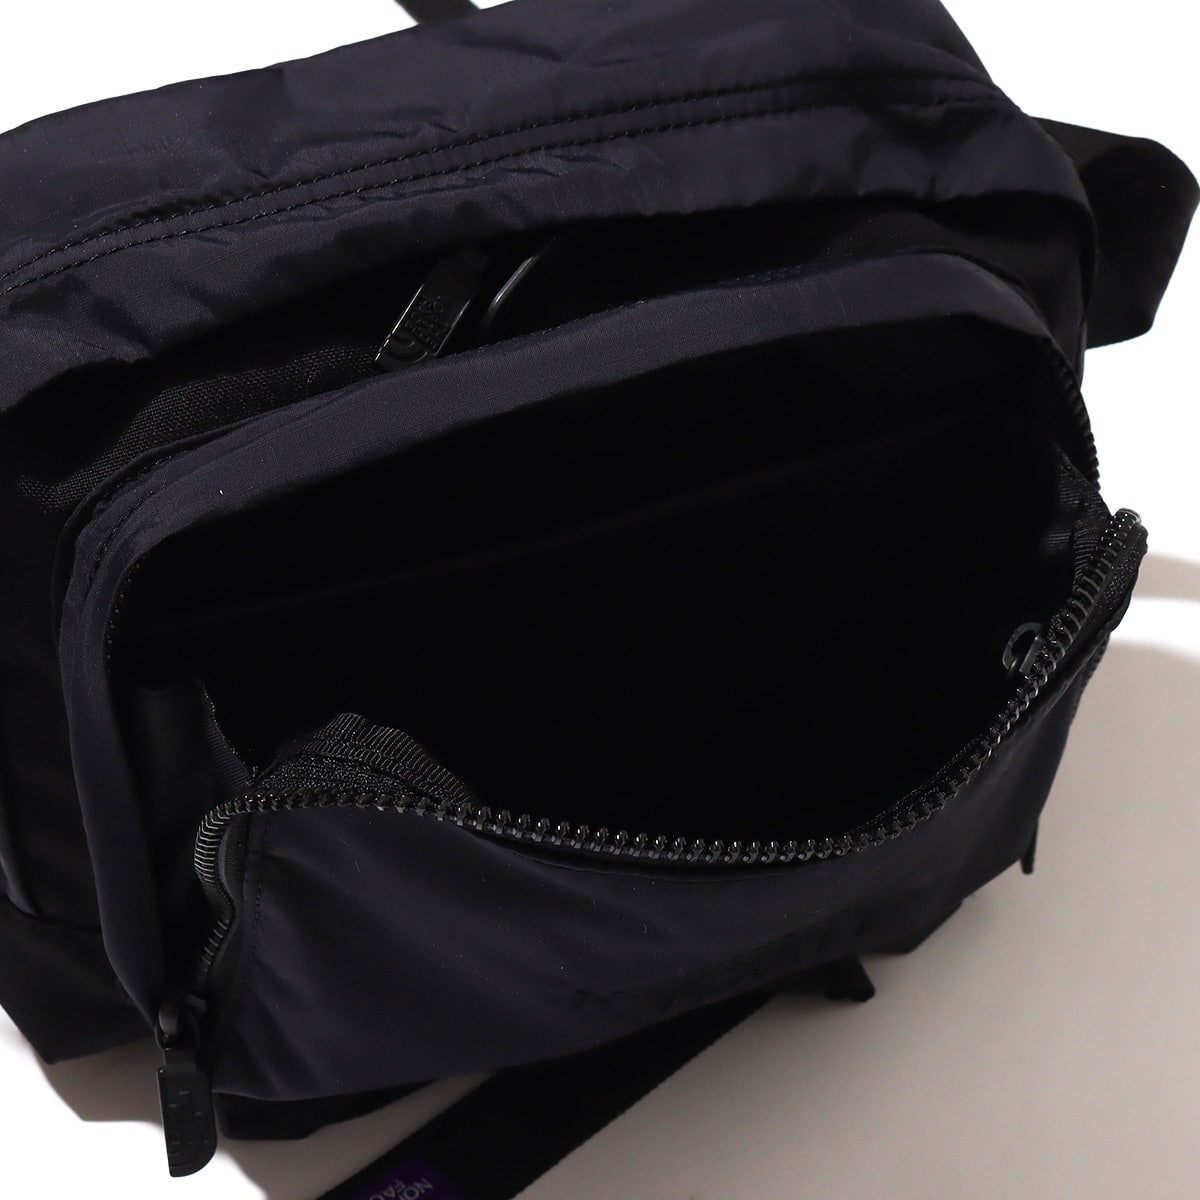 THE NORTH FACE PURPLE LABEL CORDURA Nylon Shoulder Bag Black 23FW-I